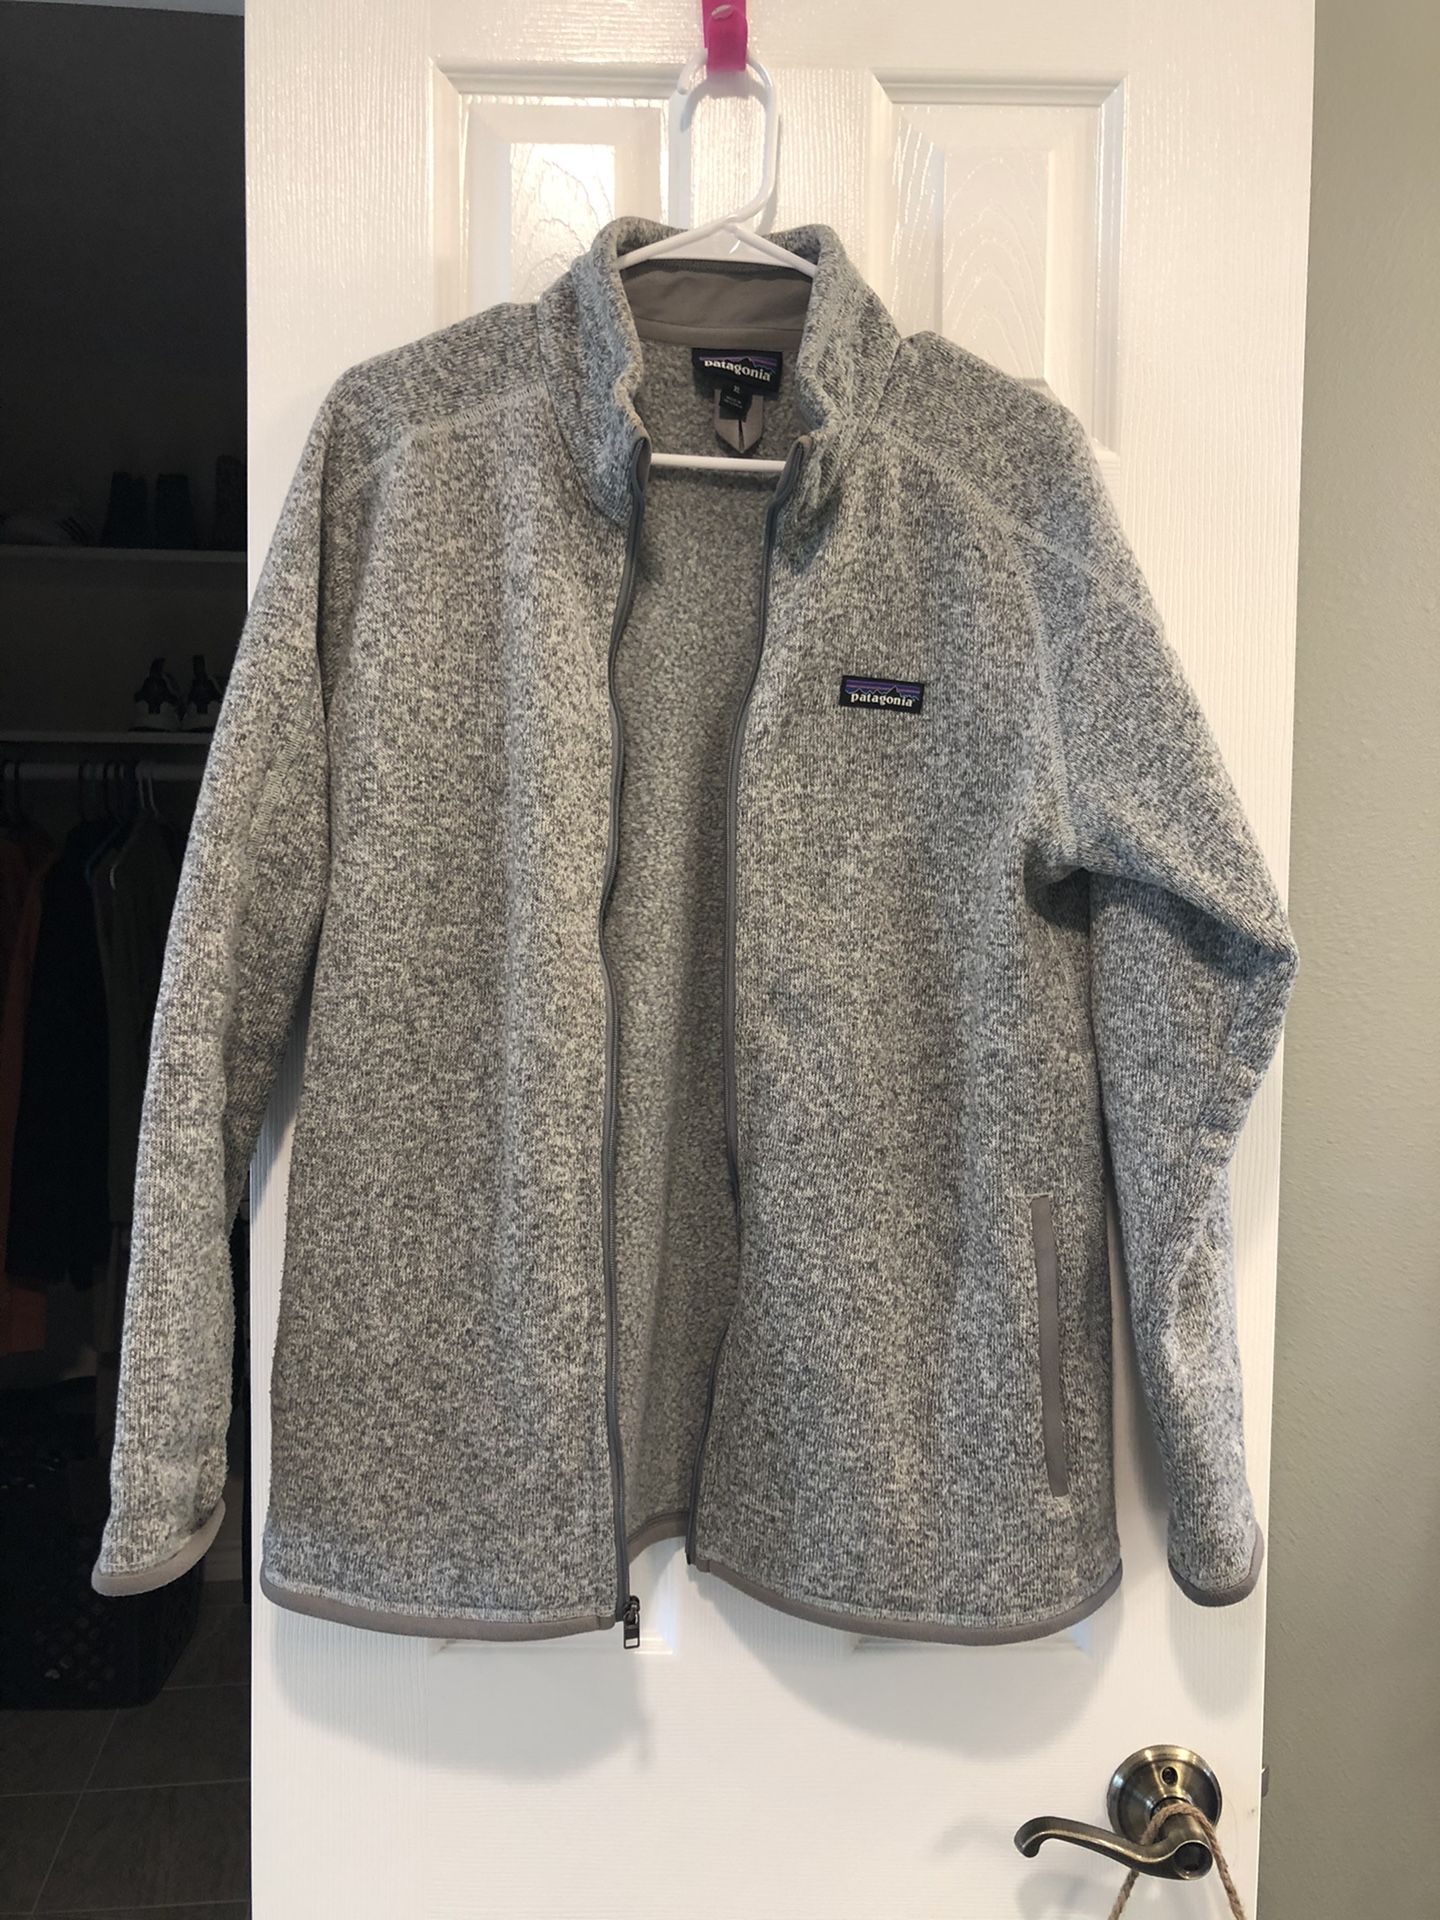 Woman’s Patagonia jacket & vest